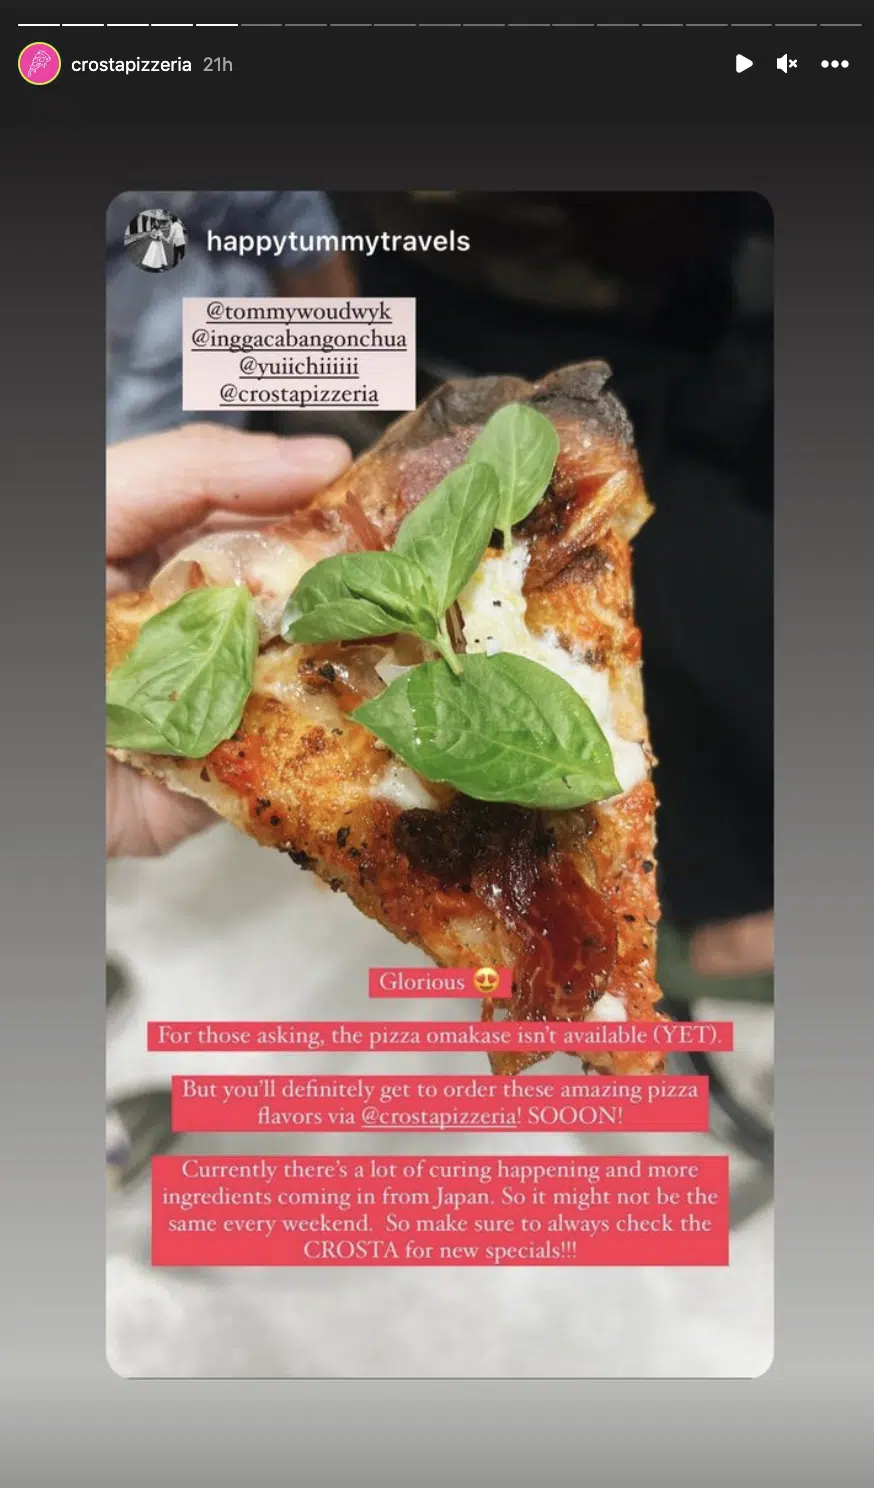 Crosta Pizzeria's instagram story of pizza